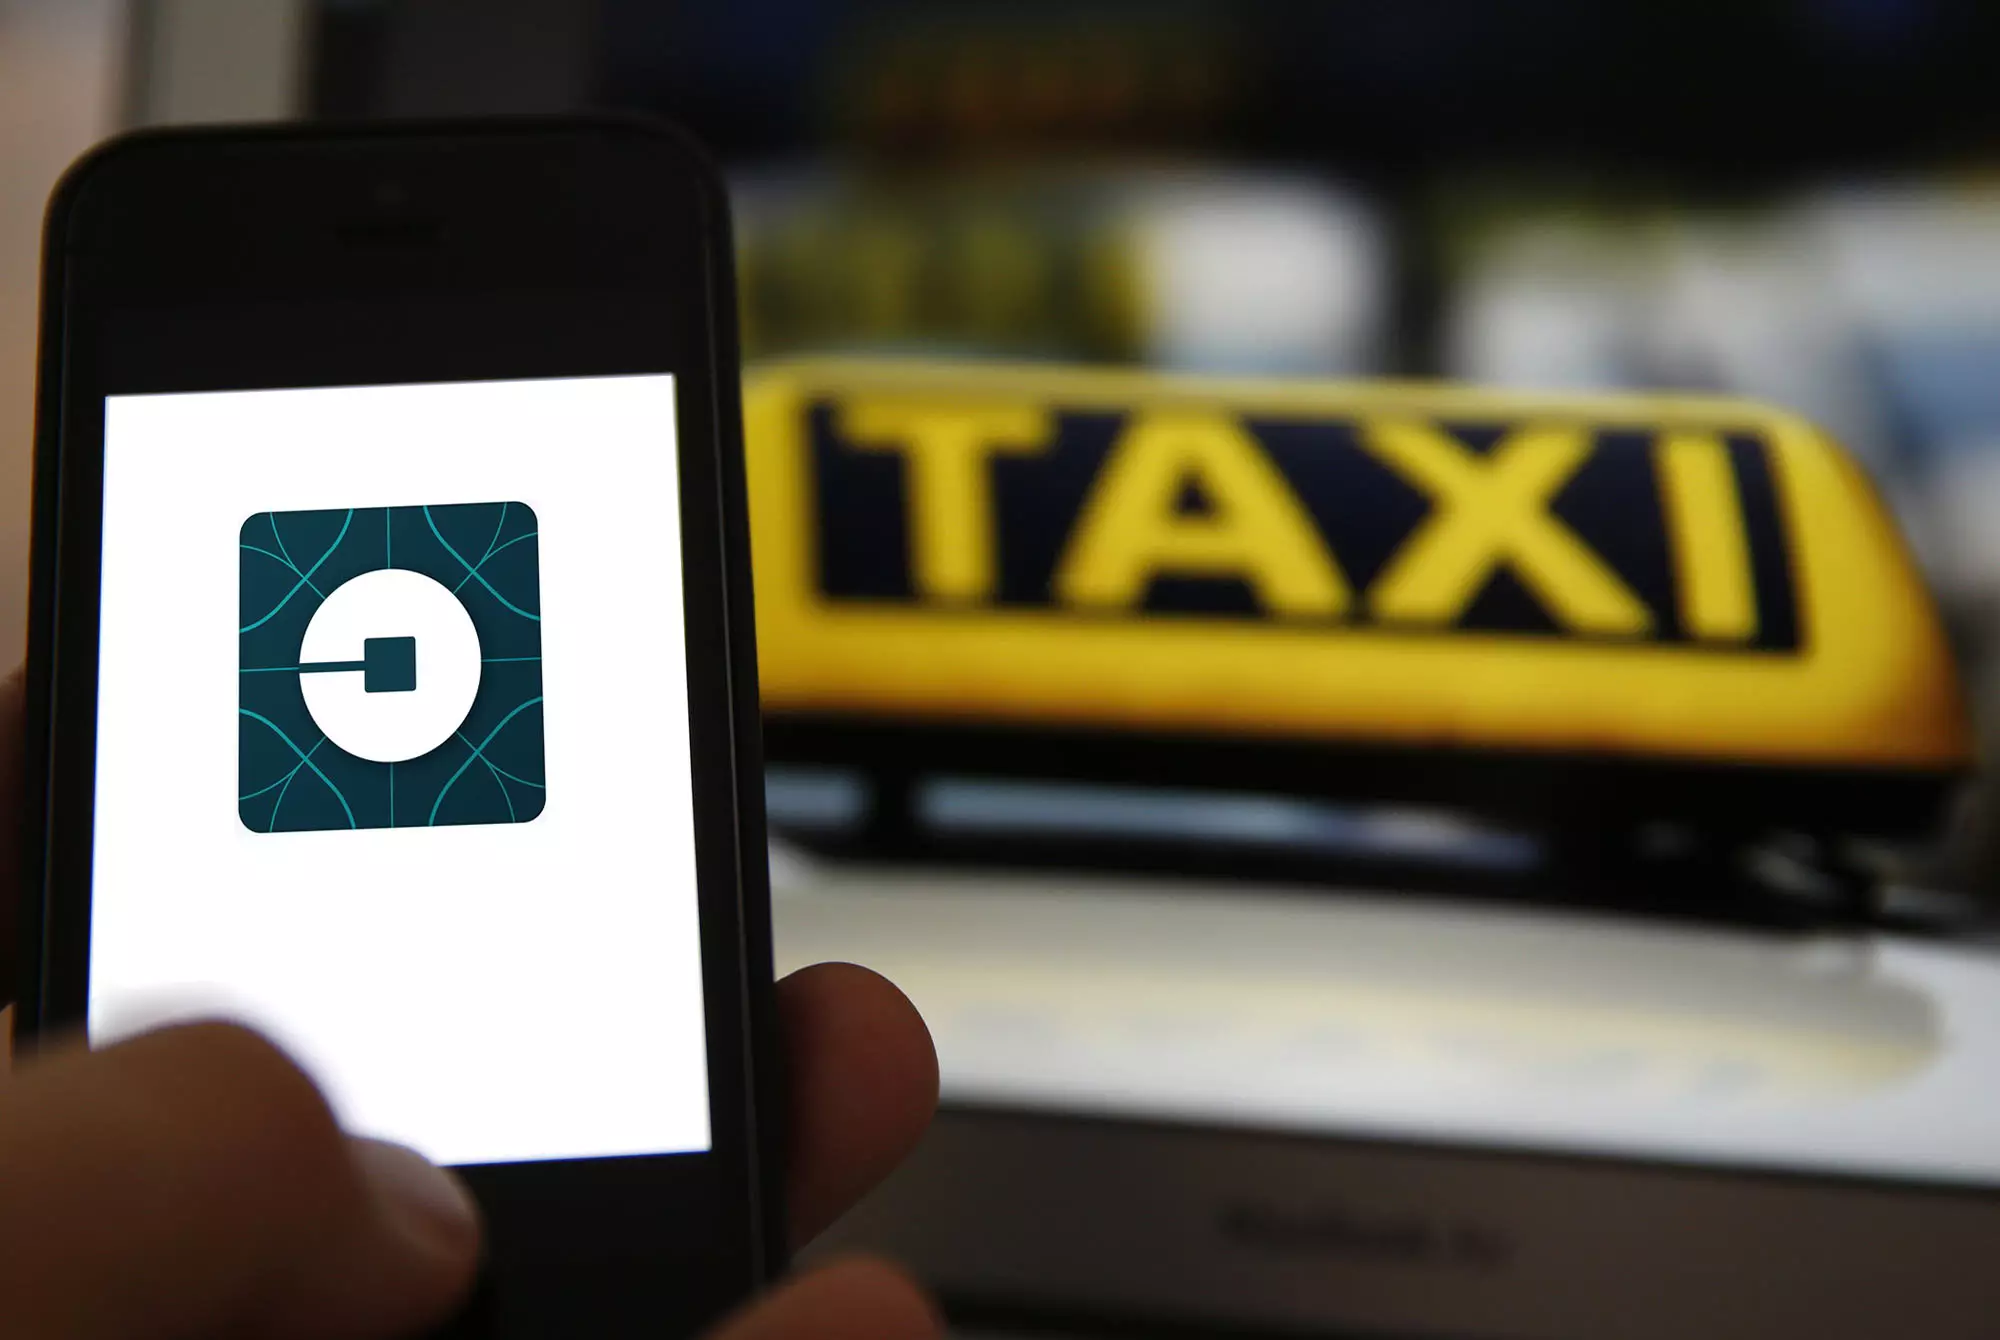 Uber Taxi, hluav taws xob platforms